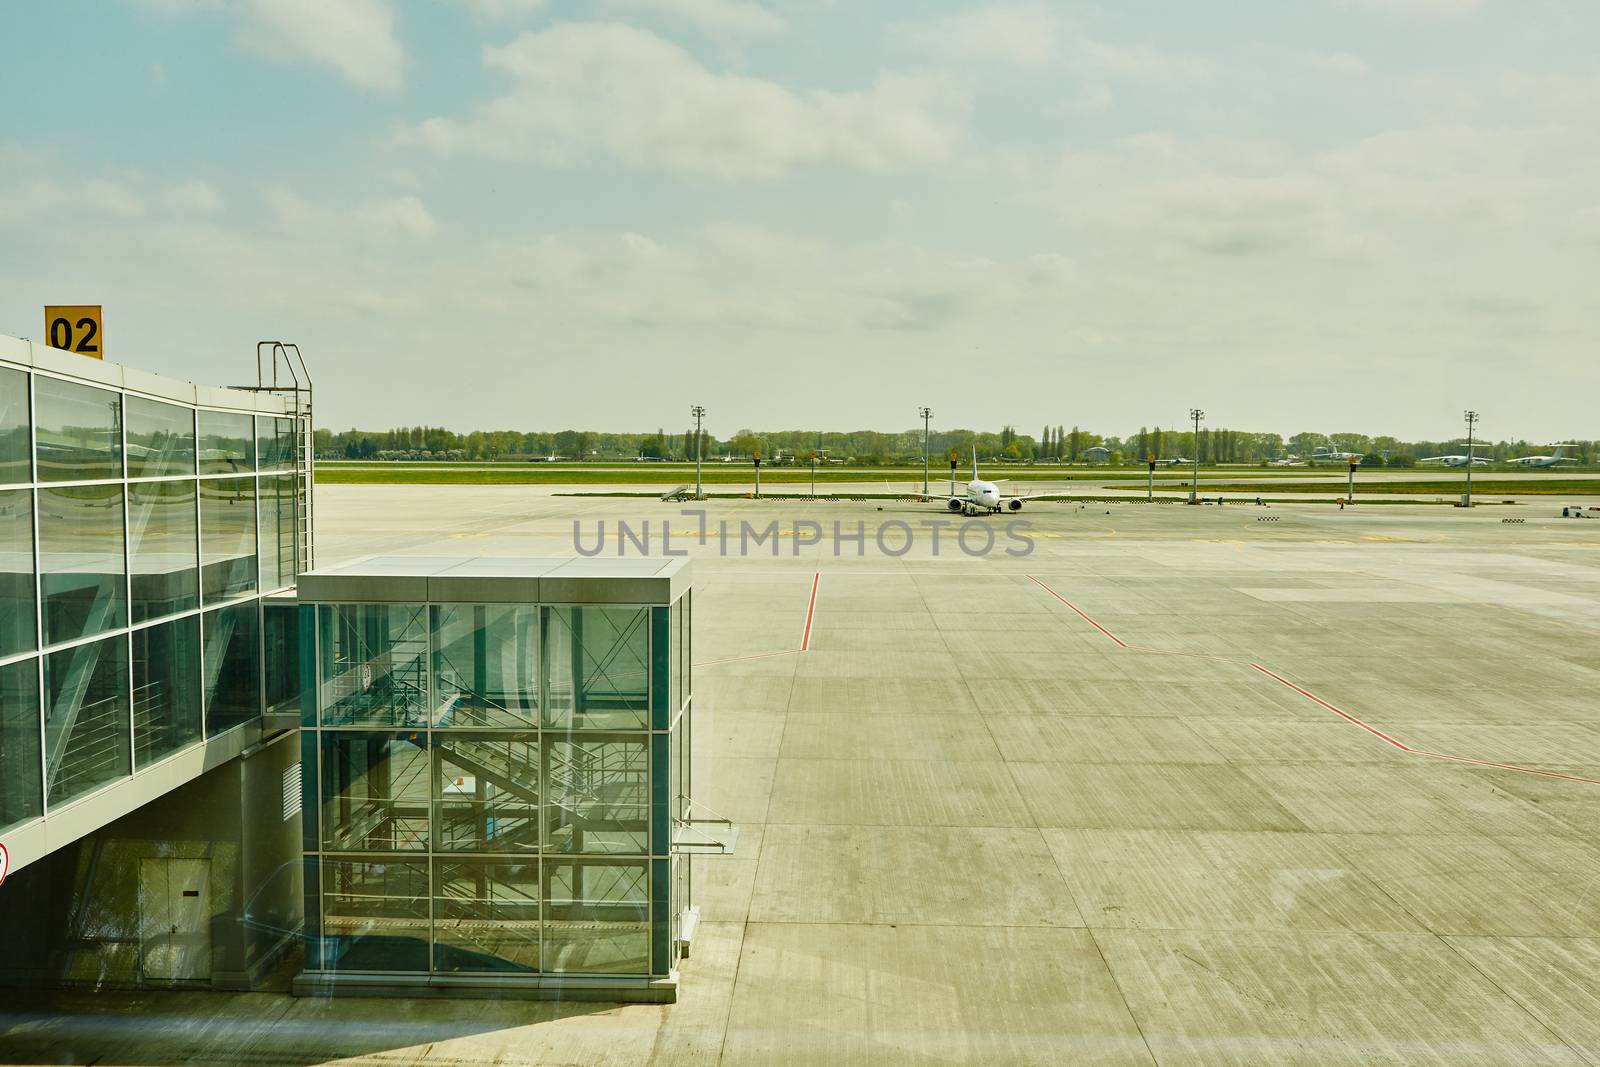 Airplane at the terminal gate ready for takeoff  by sarymsakov